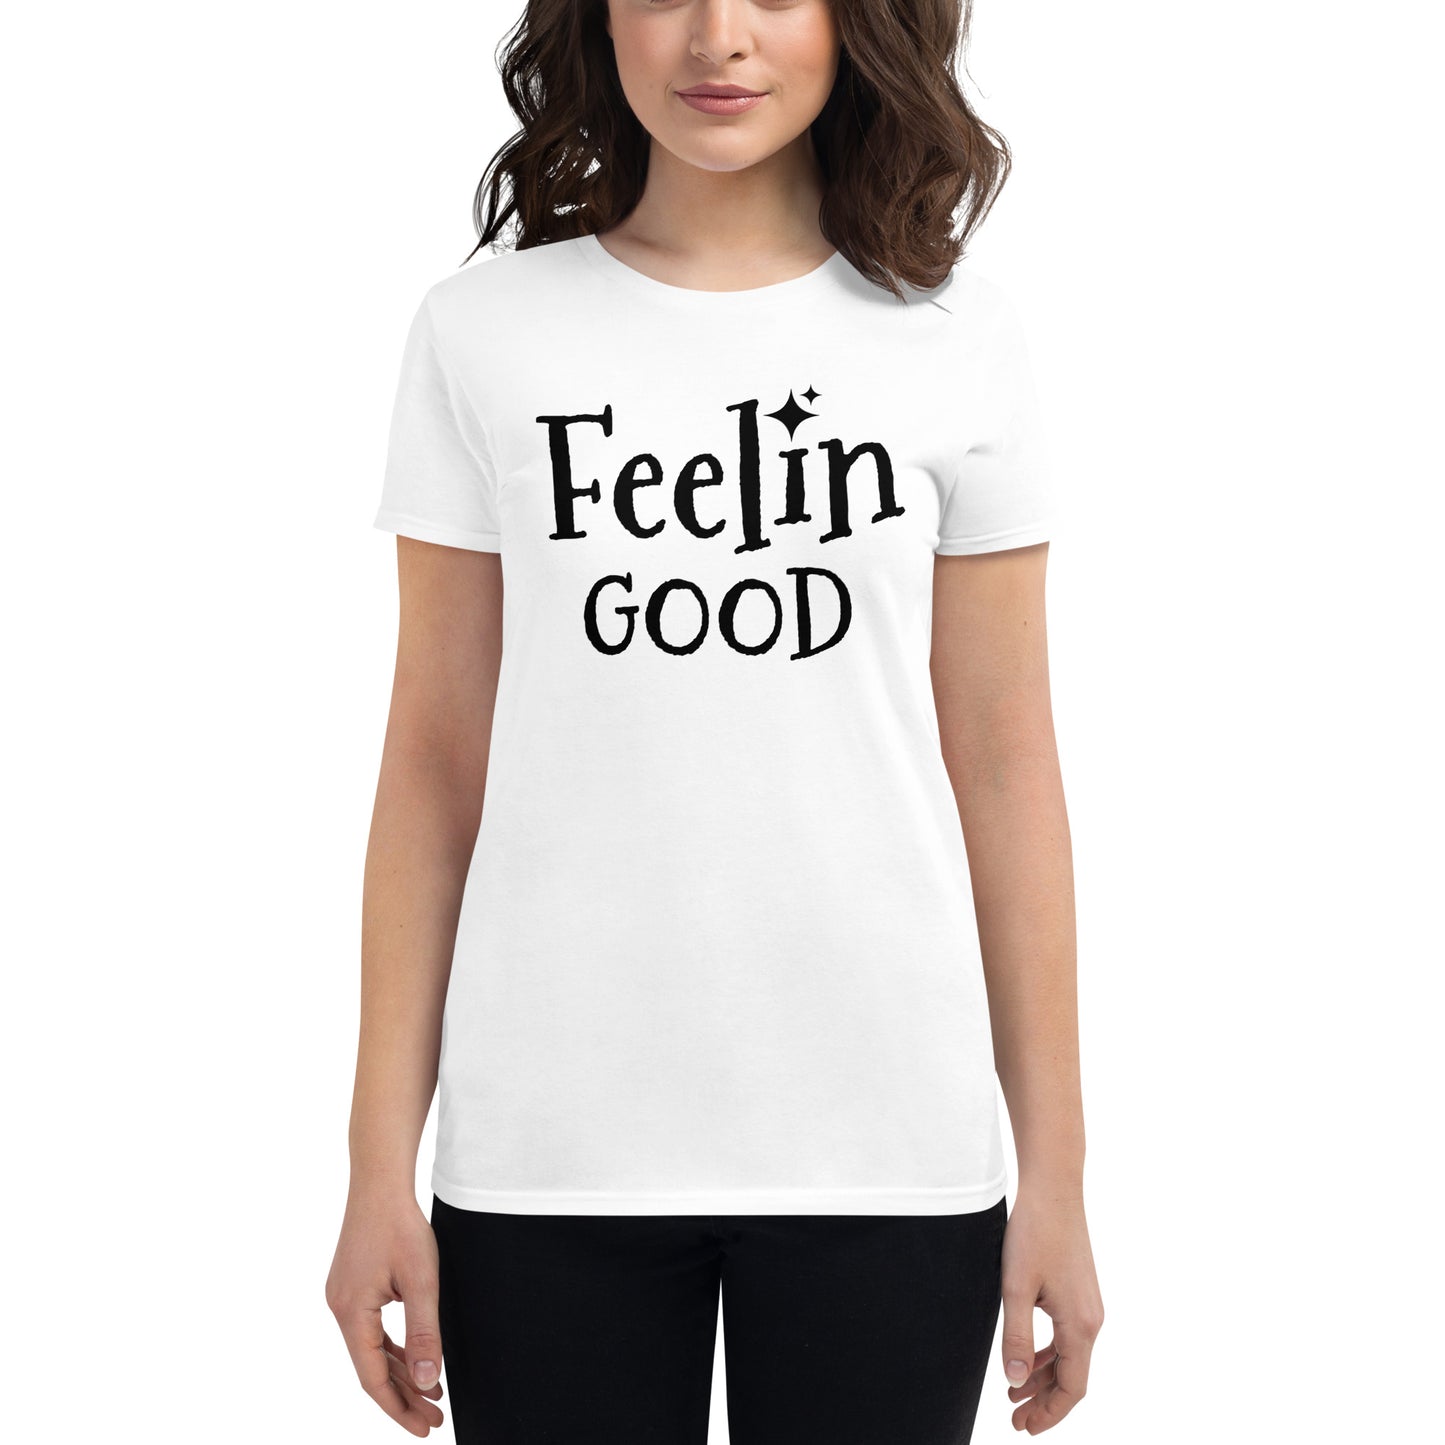 Feelin Good - Women's Short Sleeve Graphic Tee